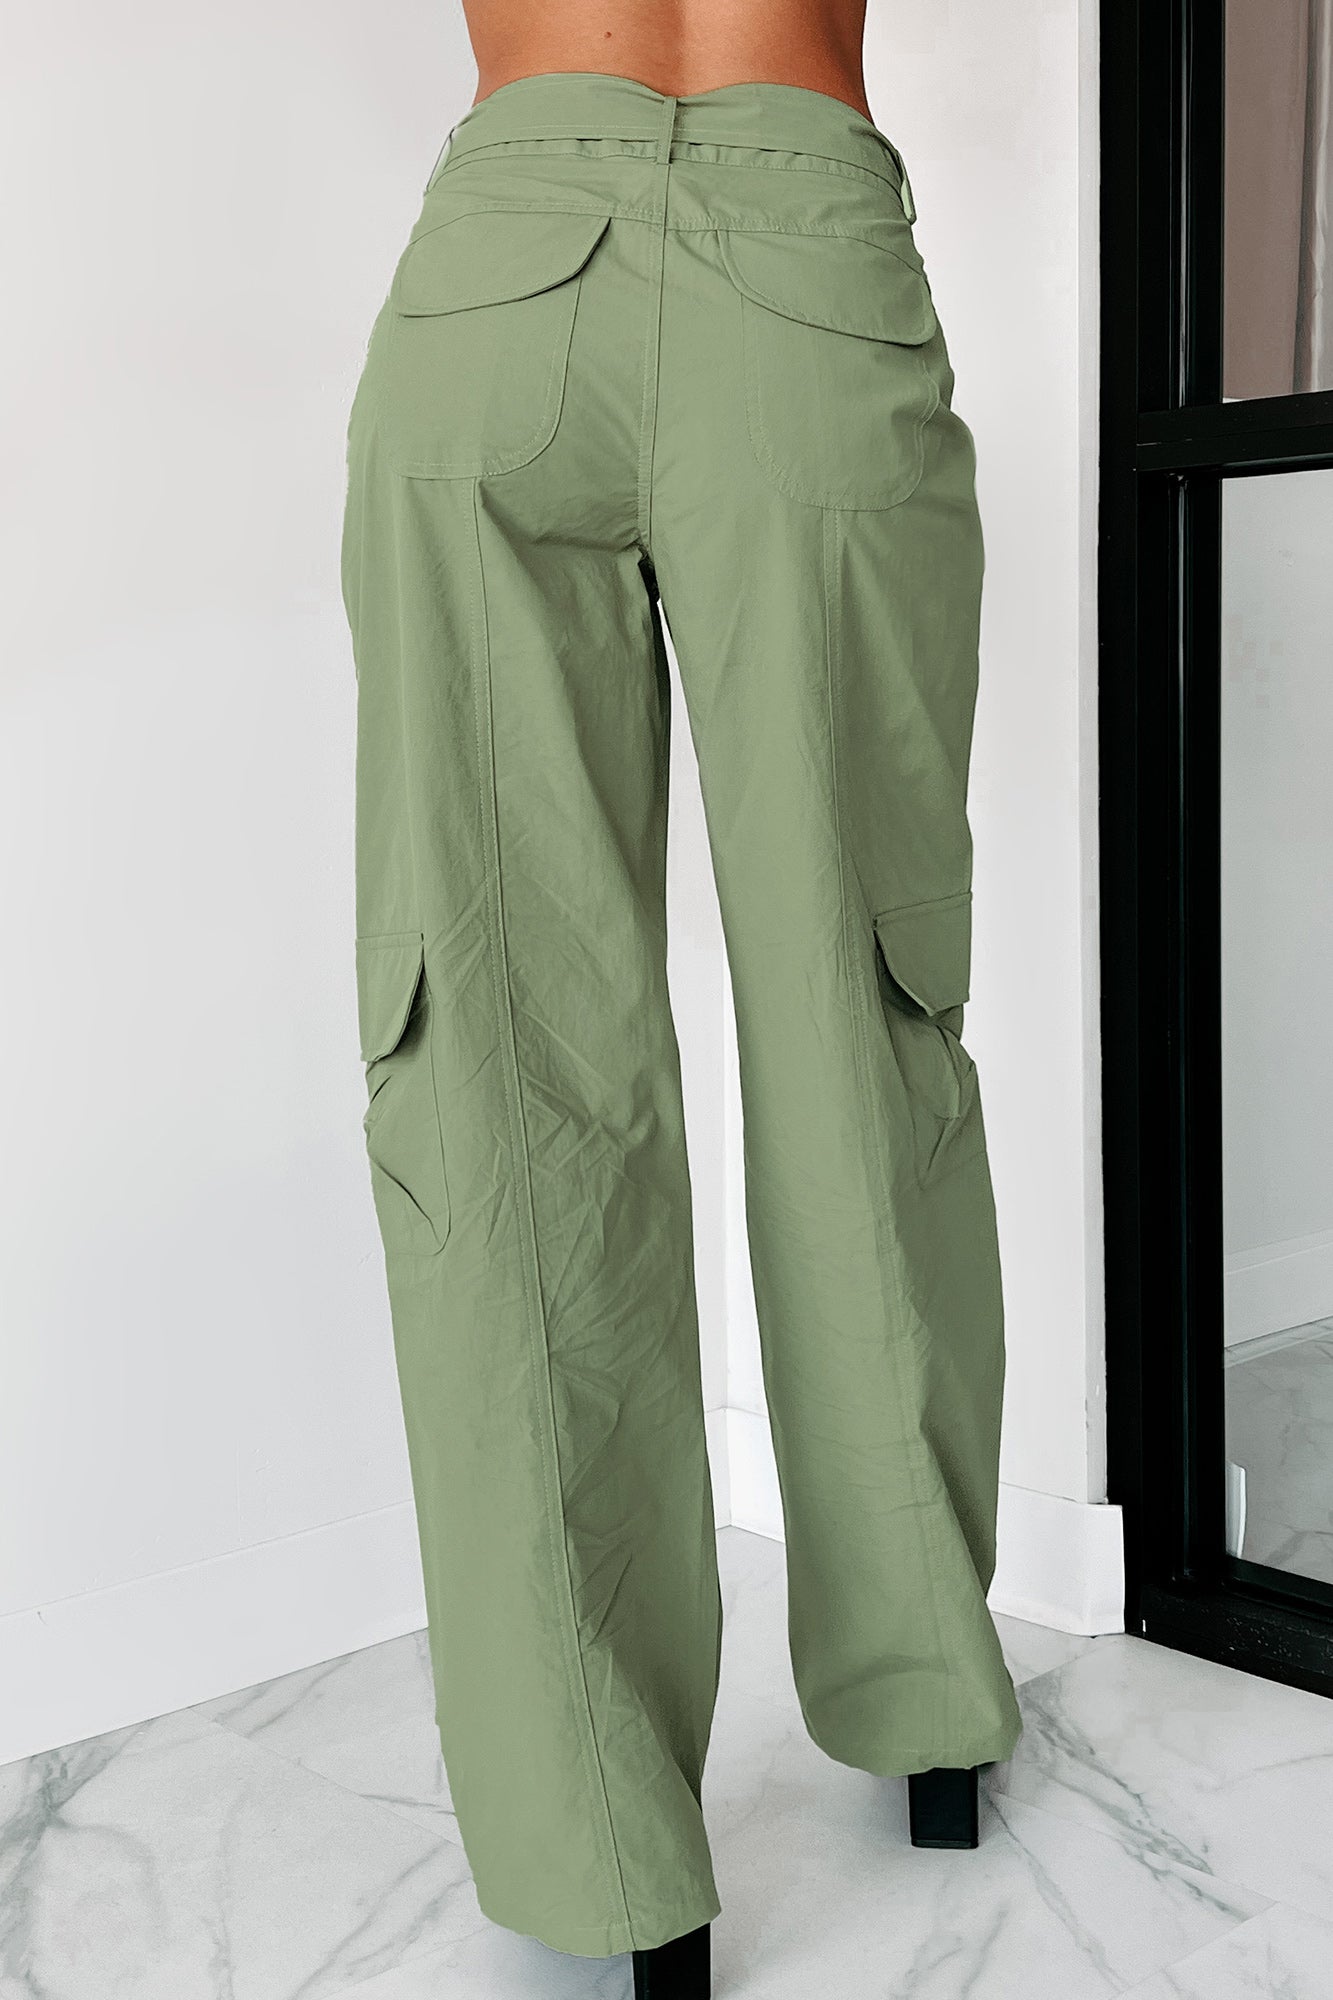 Olive Cotton Pants - High-Waist Cargo Pants - Straight Leg Pants